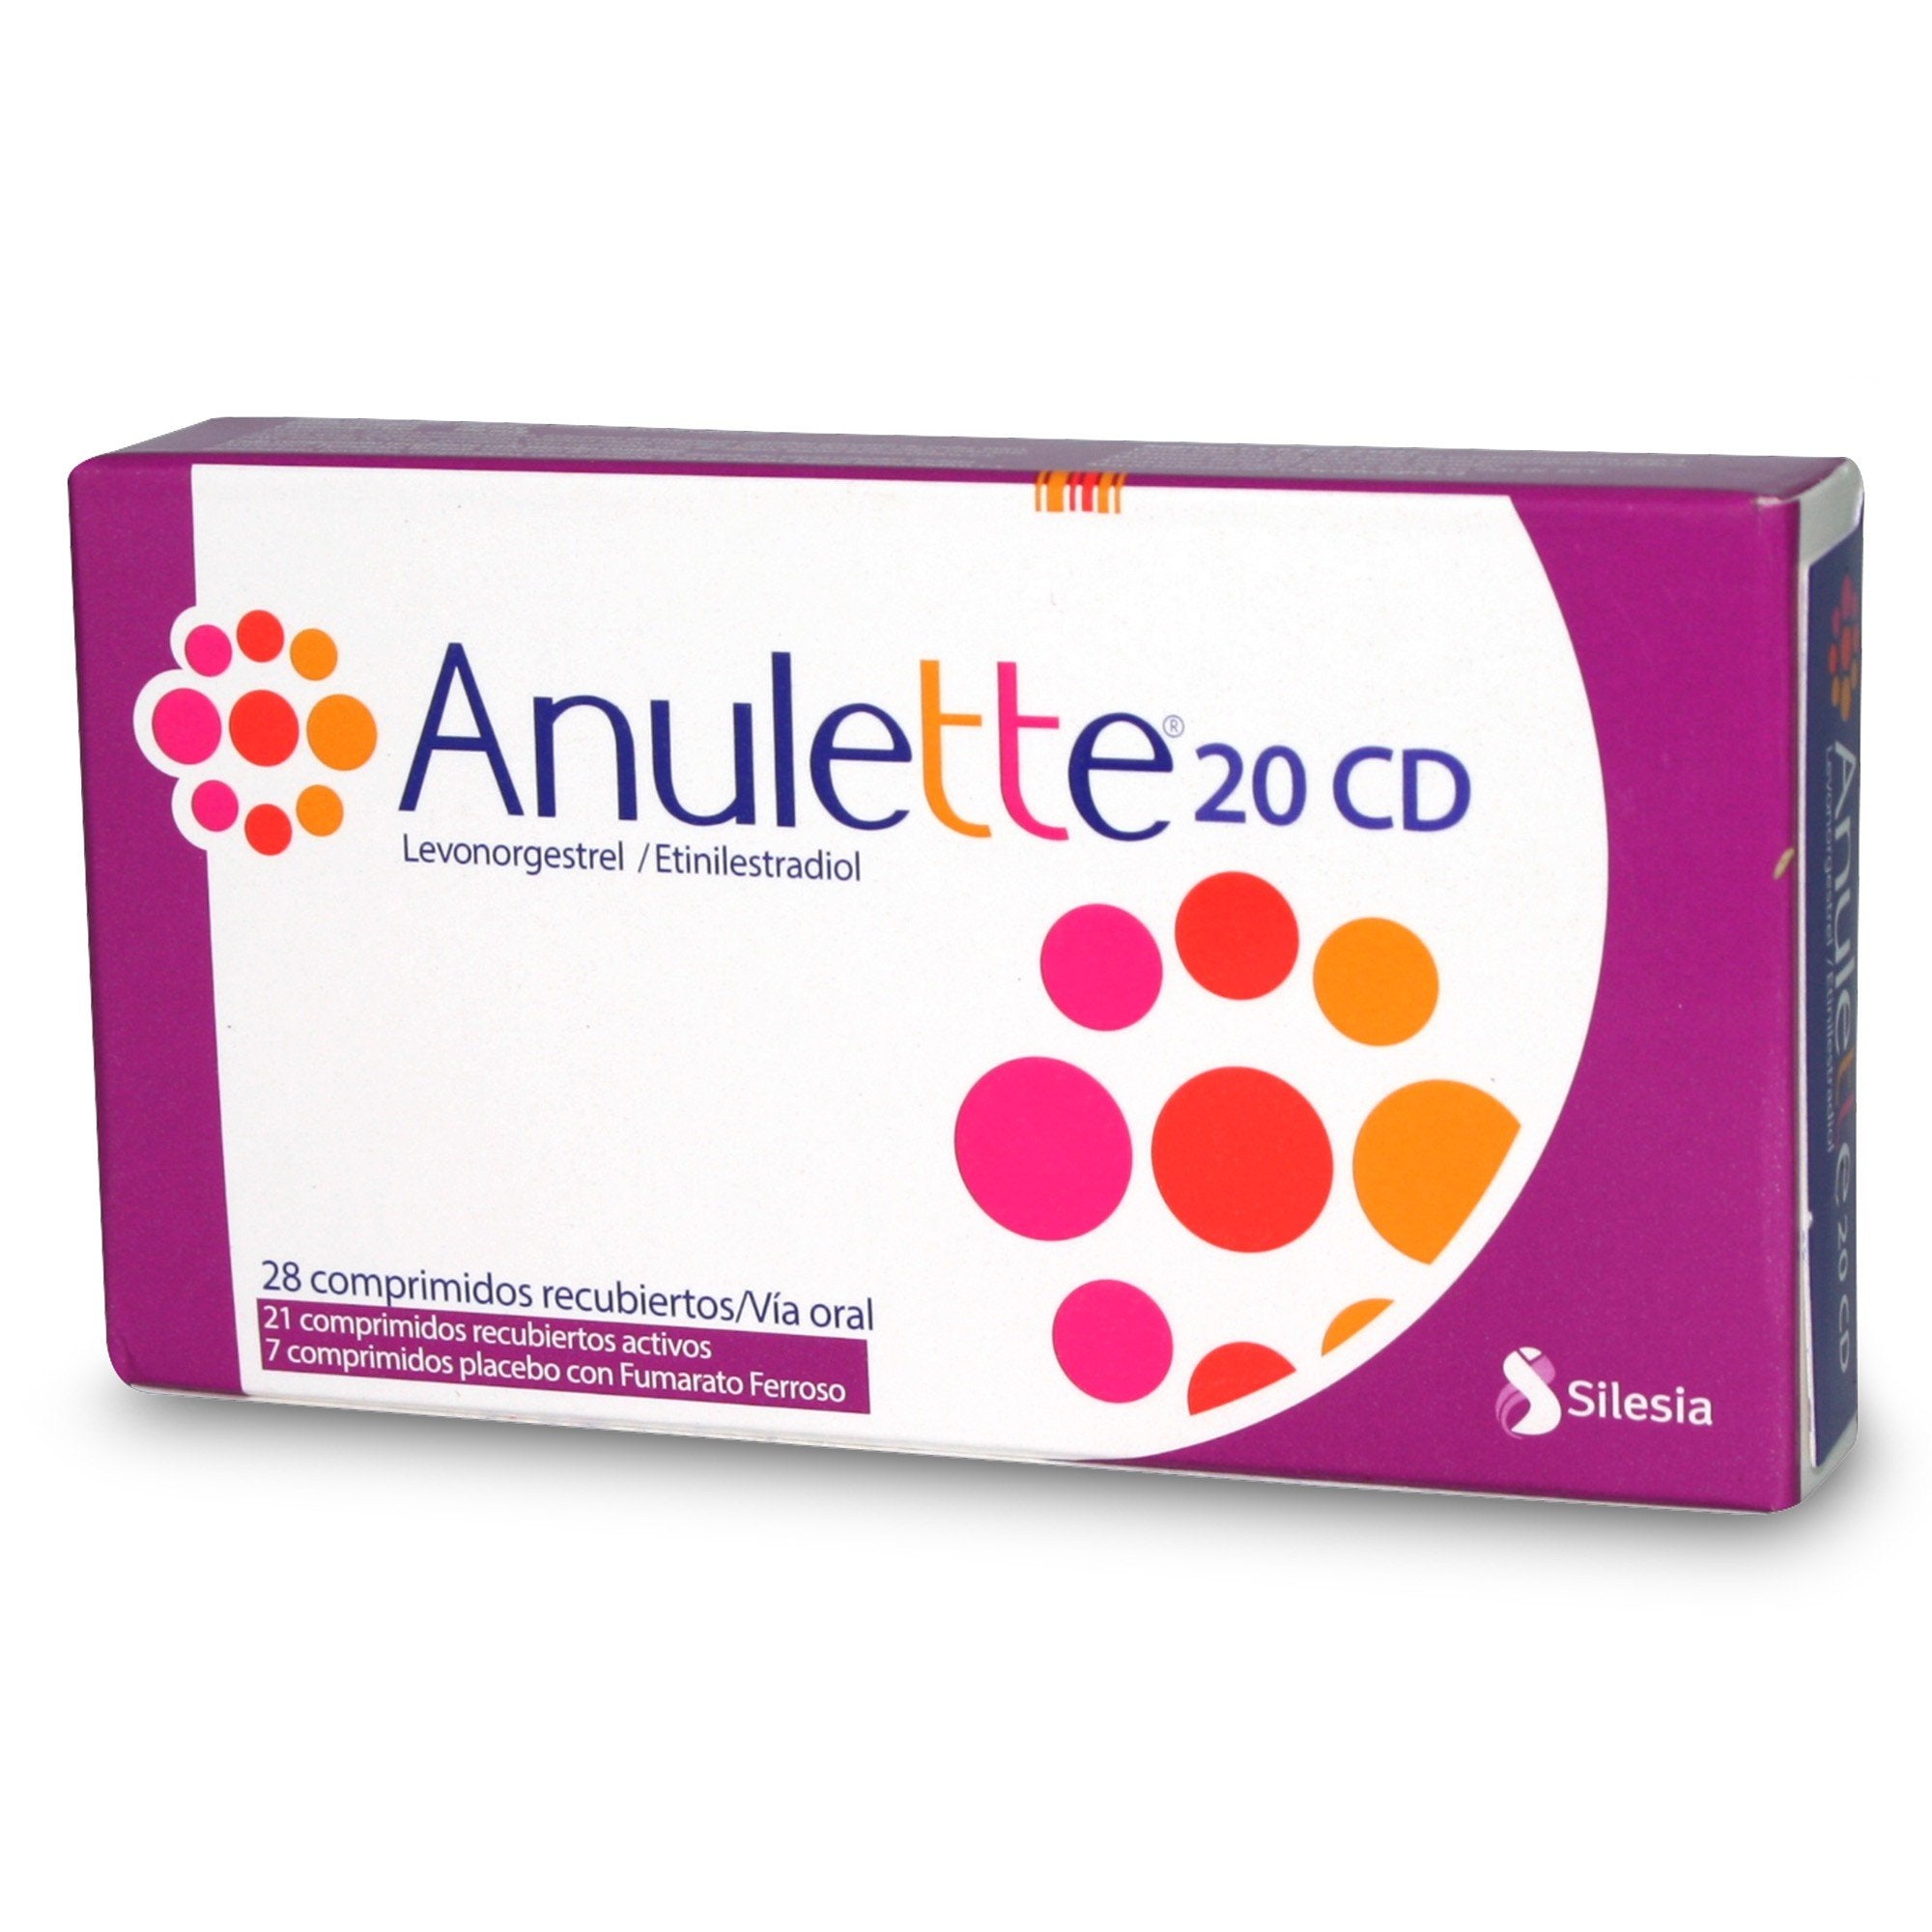 Anulette 20 CD Comprimidos Recubiertos